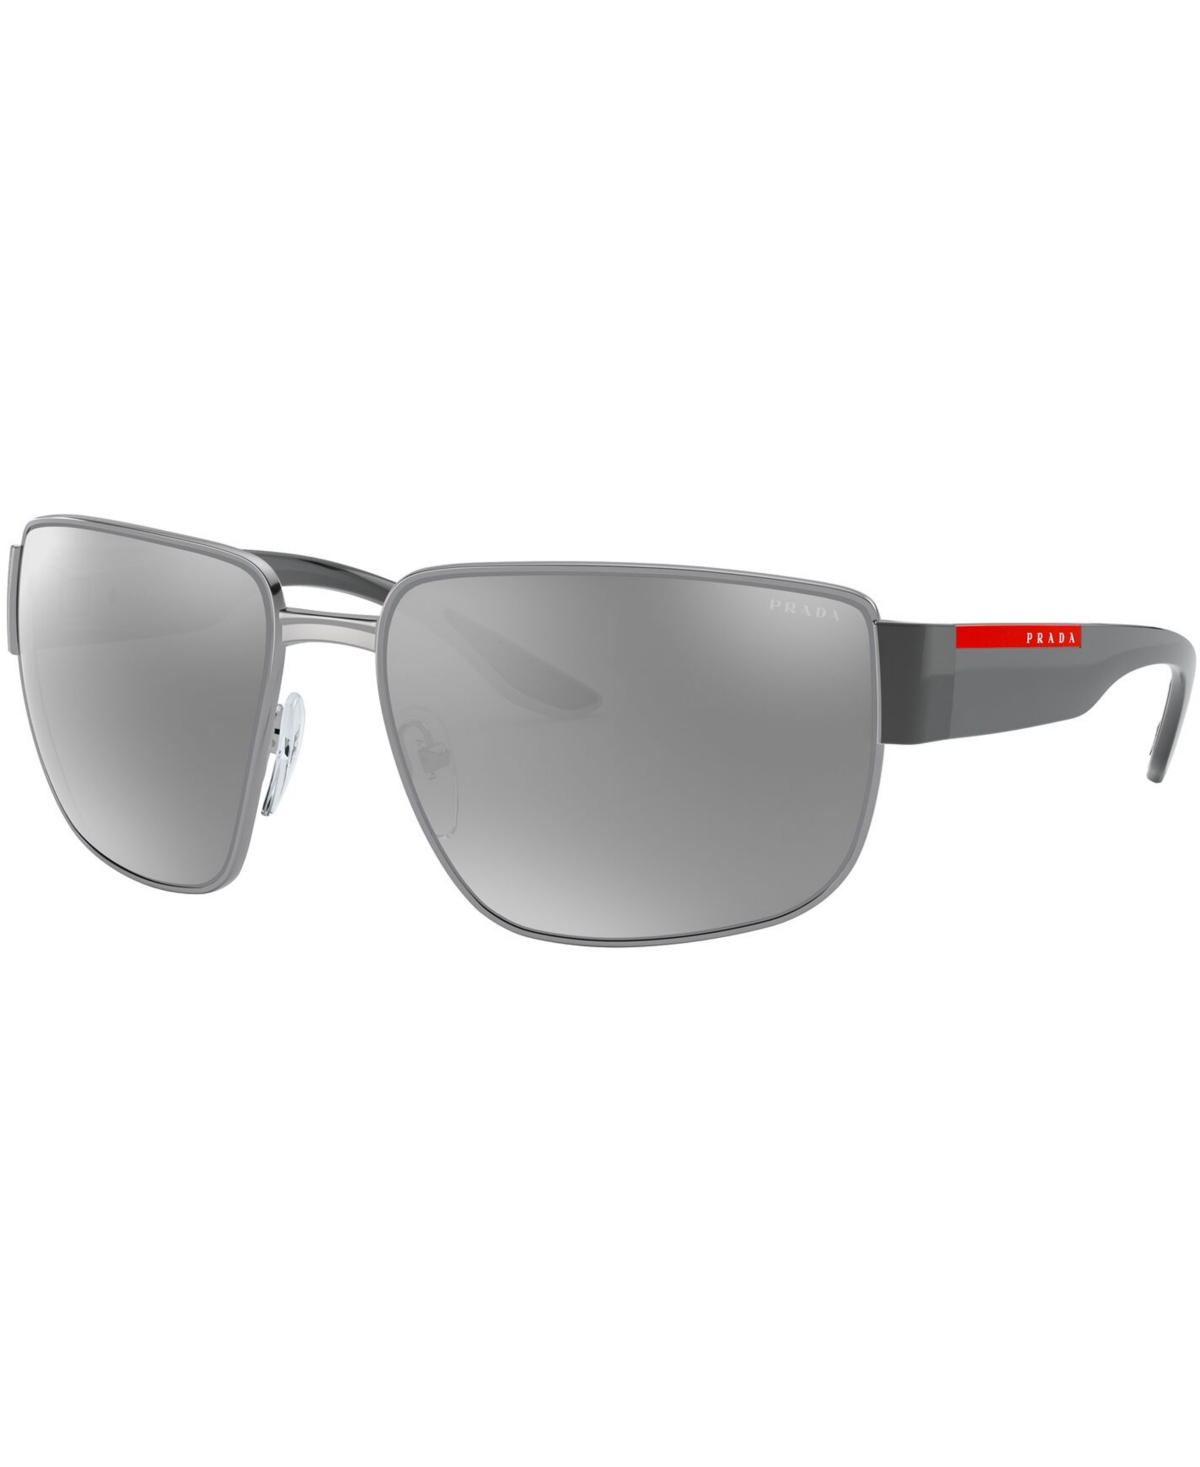 Prada Linea Rossa Men's Mirrored Sunglasses (Gunmetal/Silver) $89.88 + Free Shipping